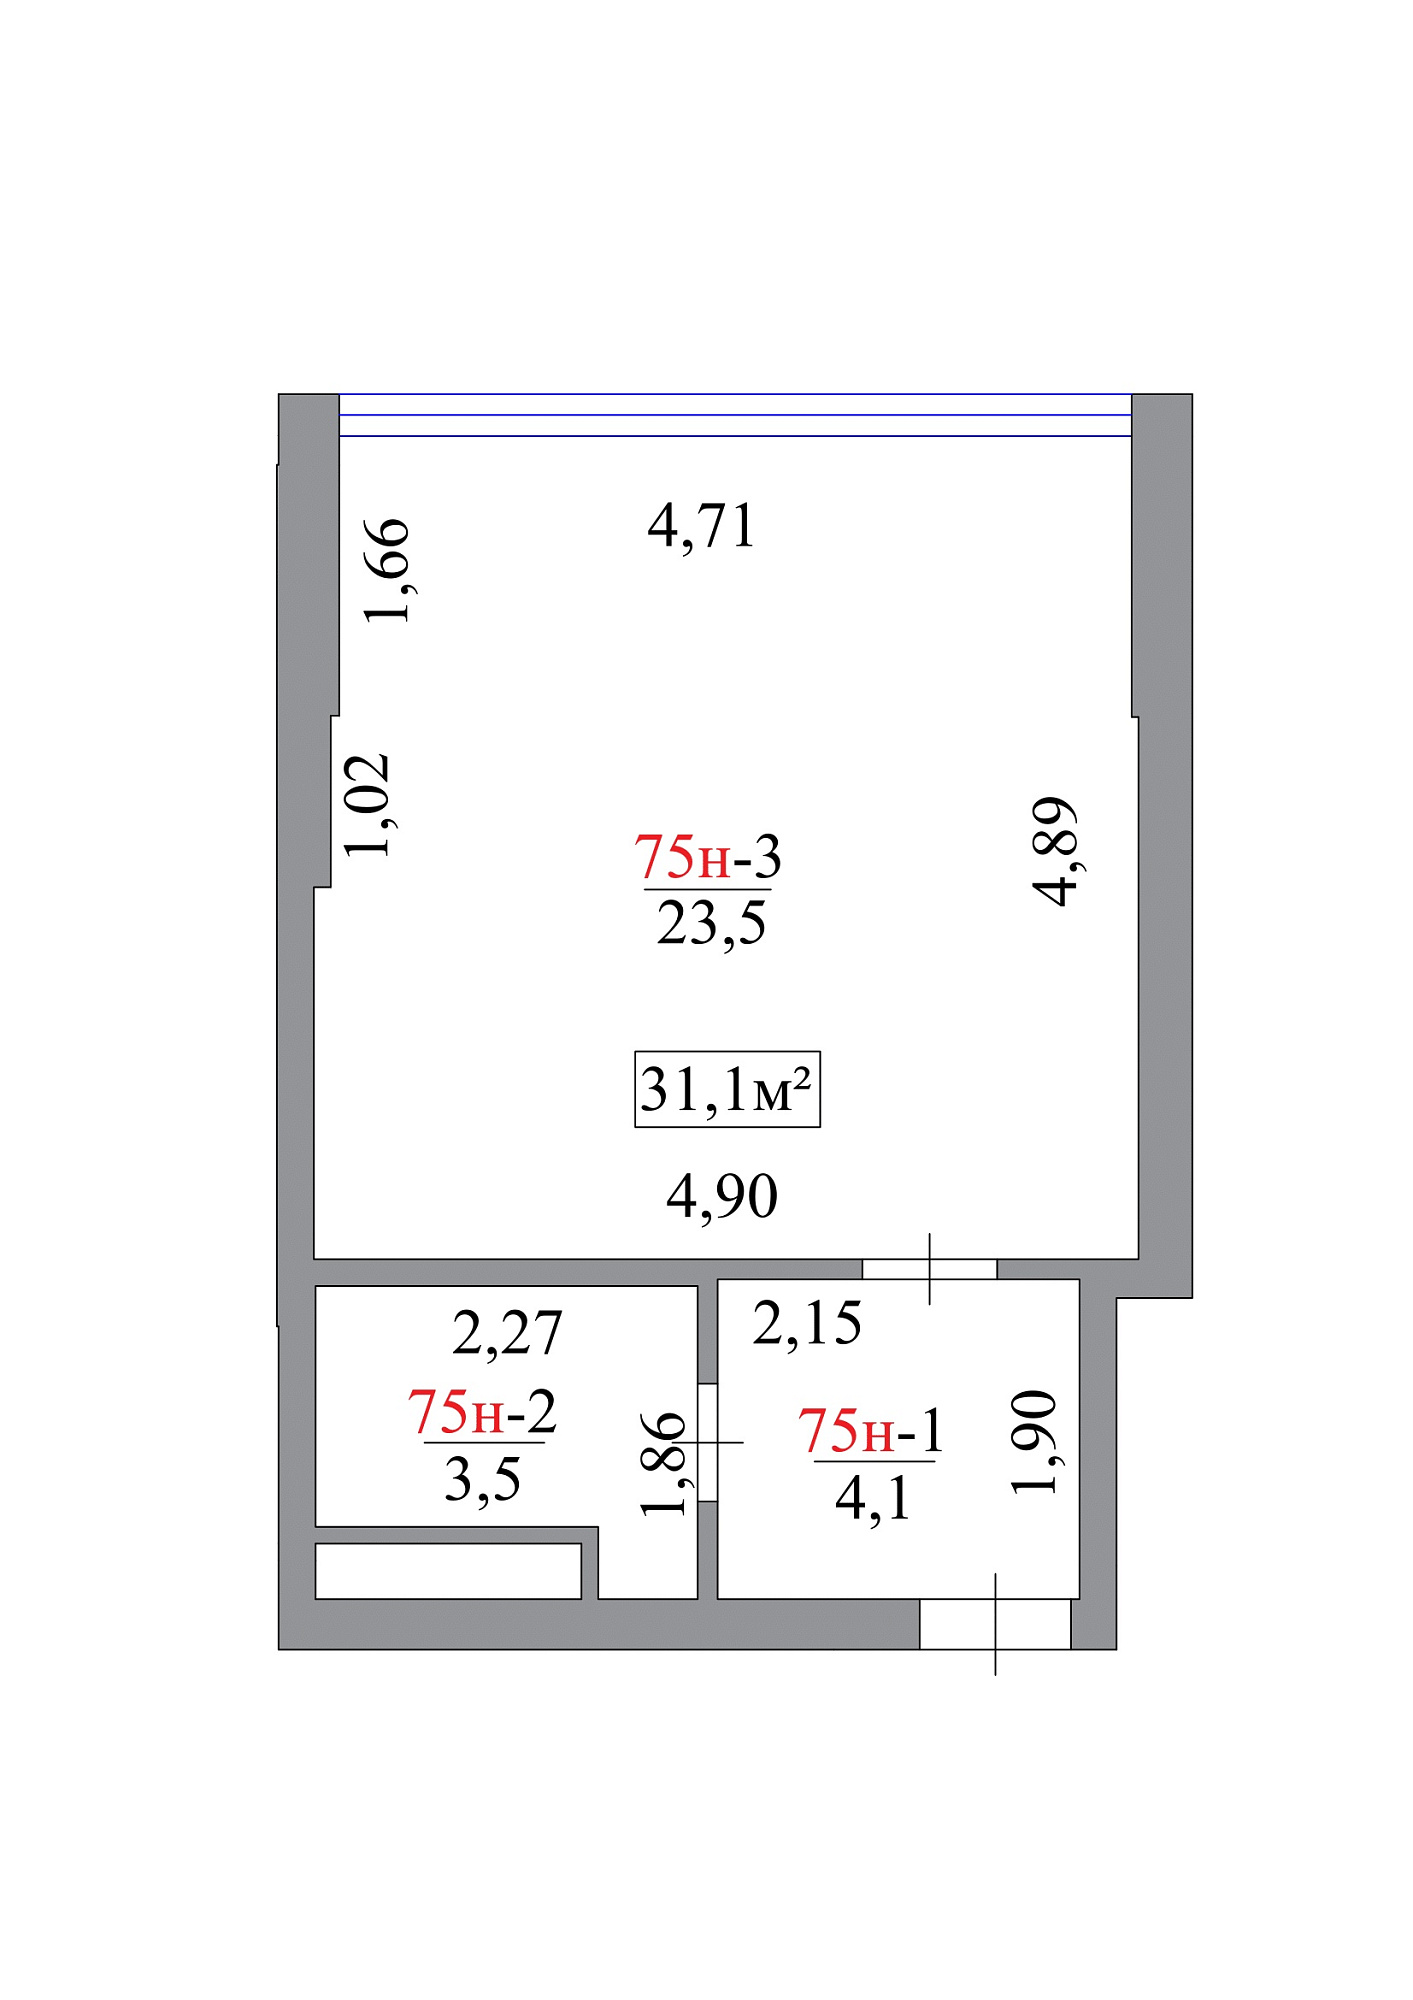 Planning Smart flats area 31.1m2, AB-07-08/00068.